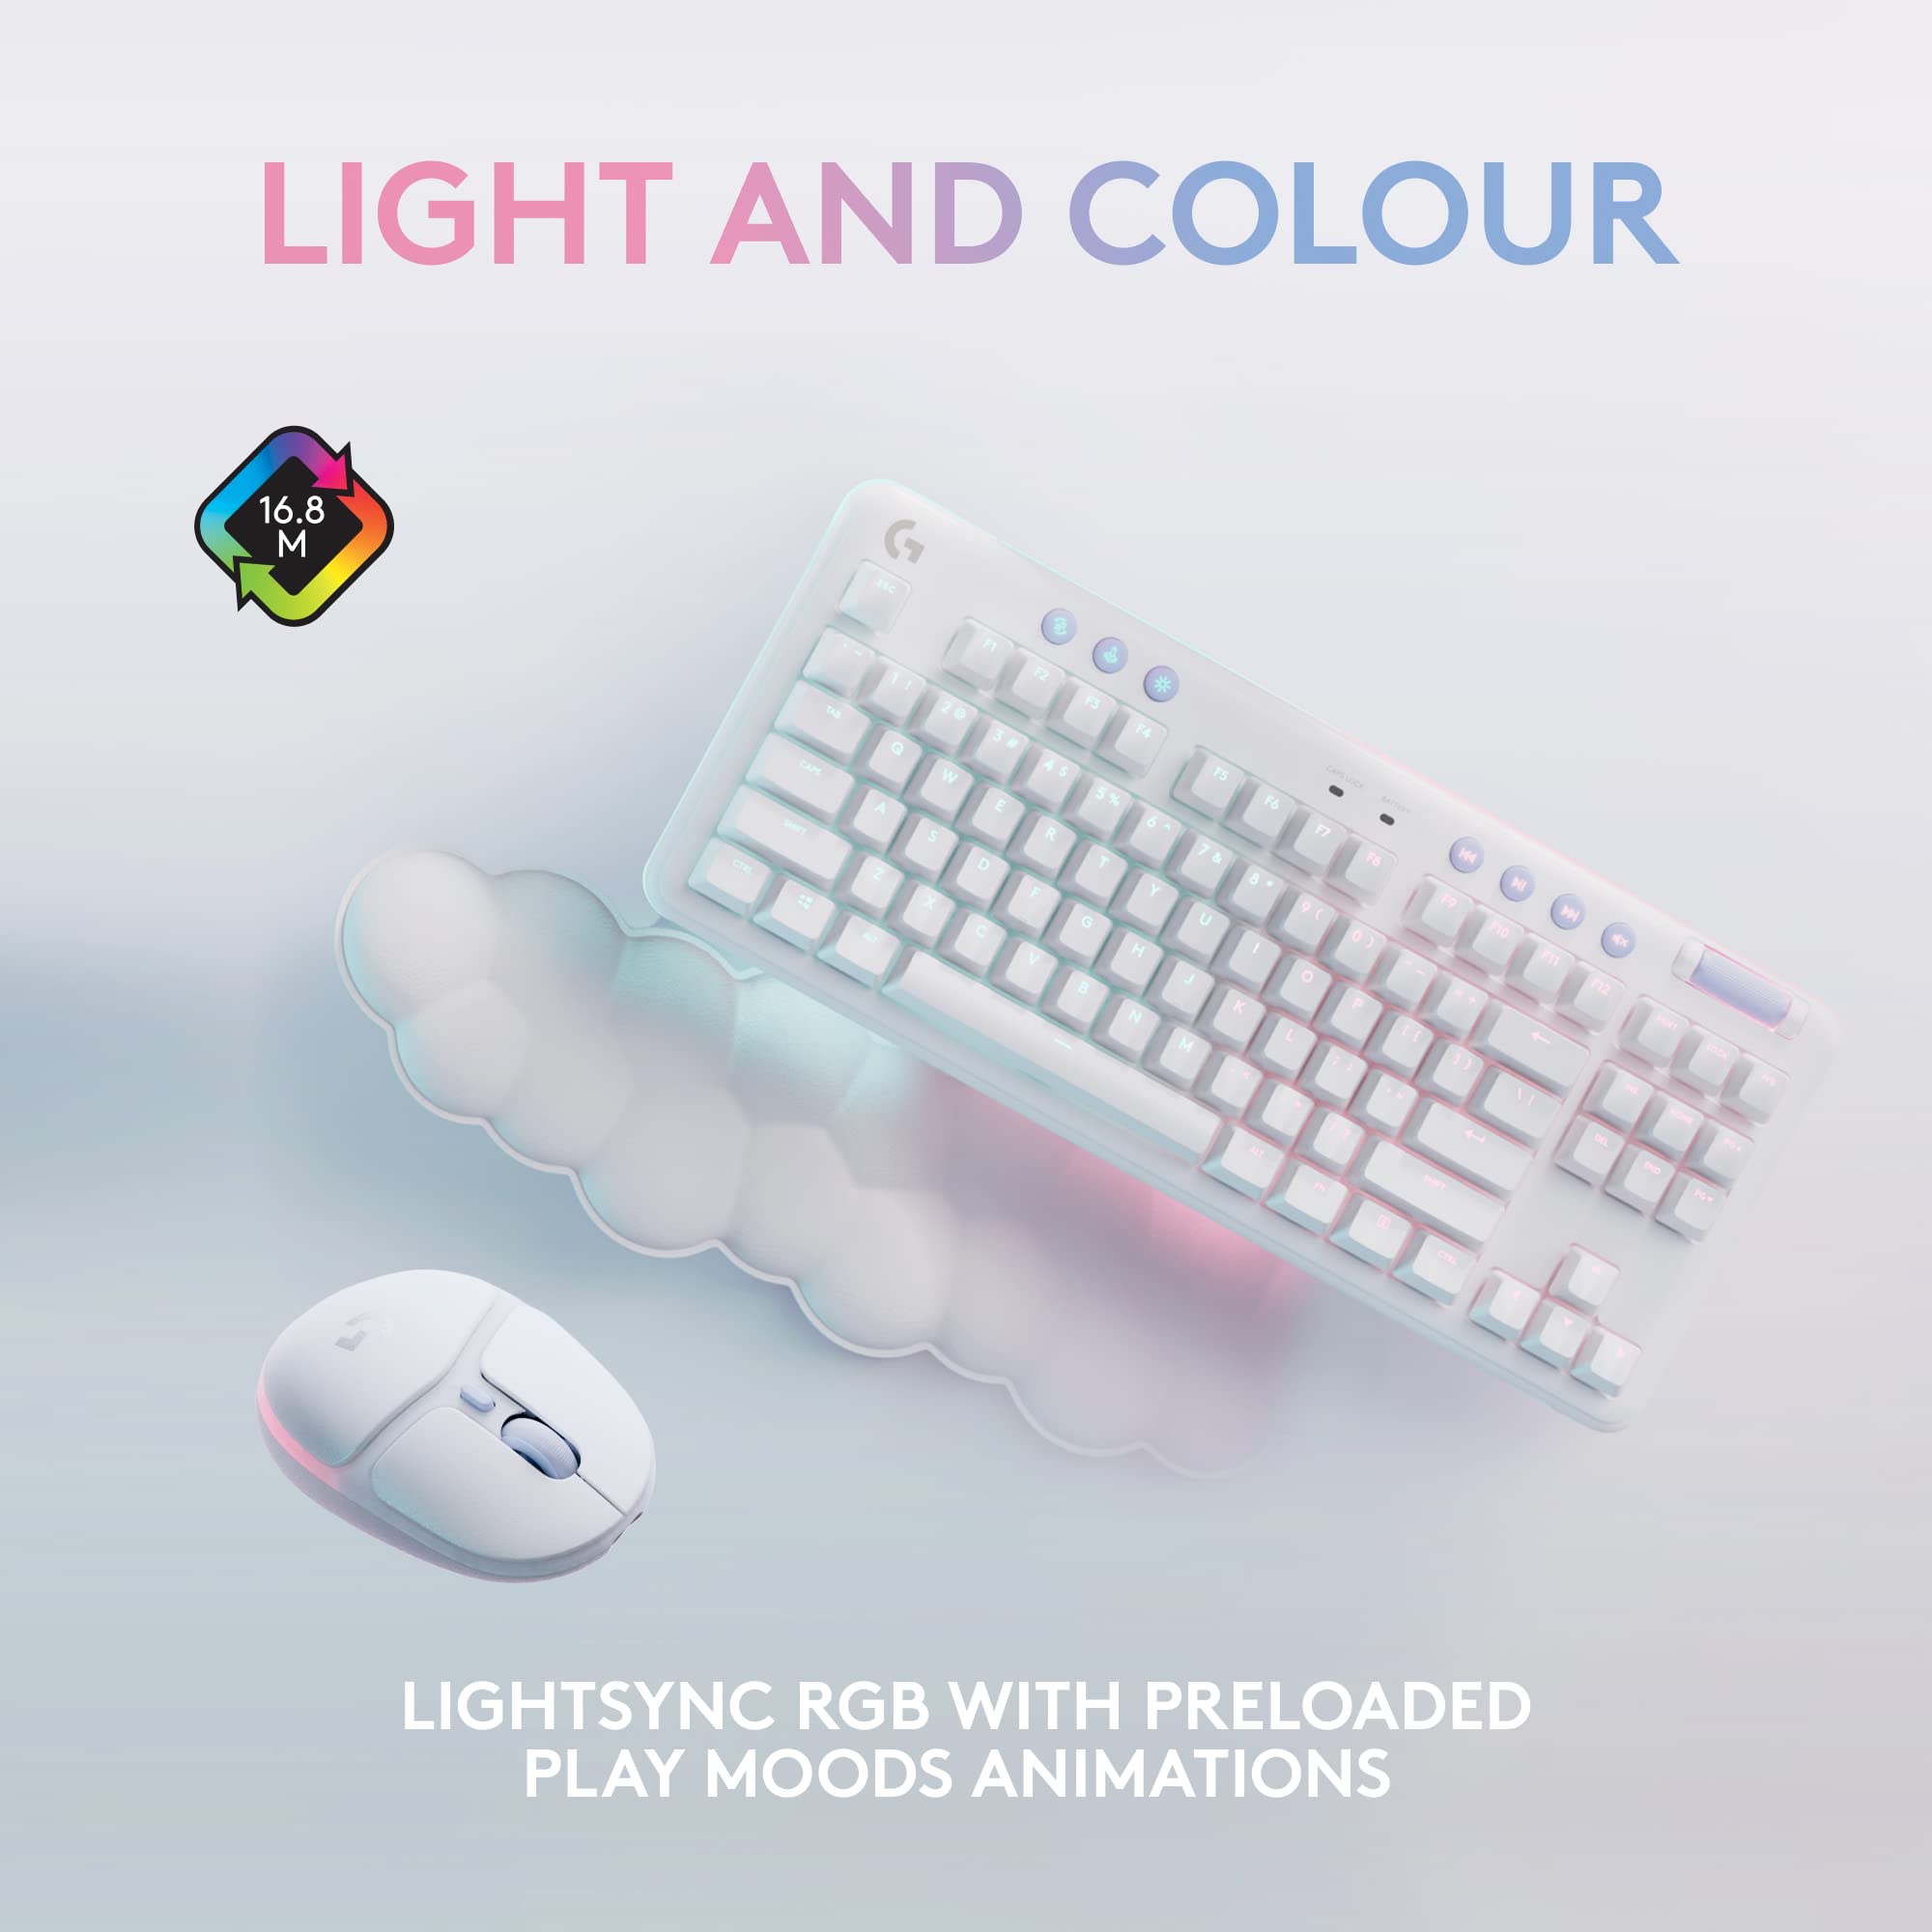 Logitech G Wireless Gaming Combo, G715 Keyboard Clicky + G705 Mouse, Customizable LIGHTSYNC RGB Lighting, Lightspeed Wireless, Bluetooth, PC/Mac/Laptop - White Mist